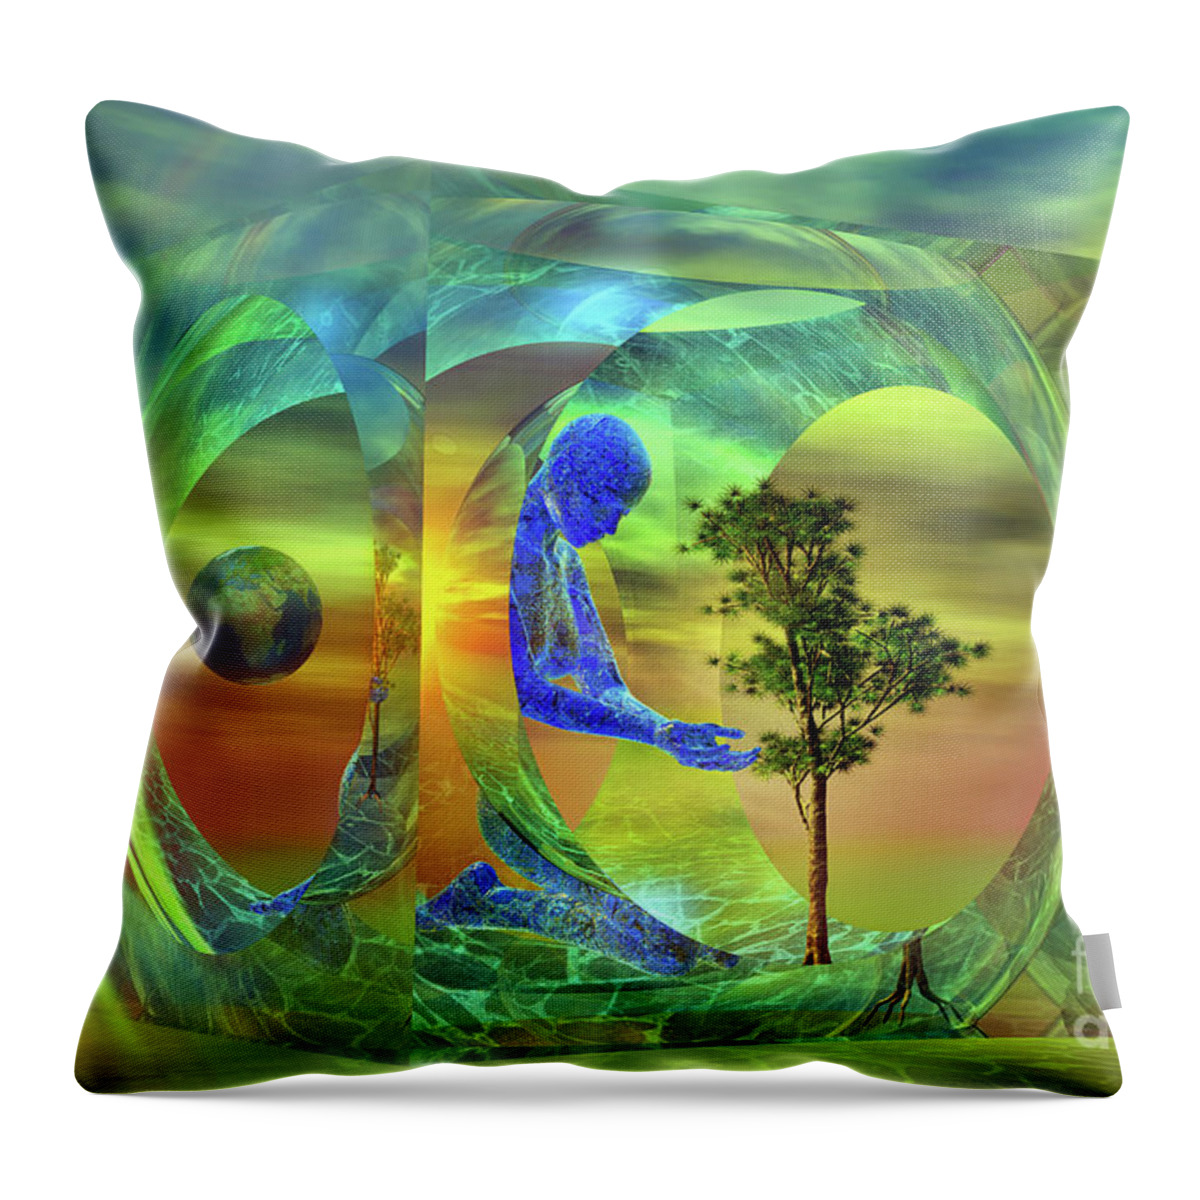 Gardener Throw Pillow featuring the digital art The Gardener by Shadowlea Is